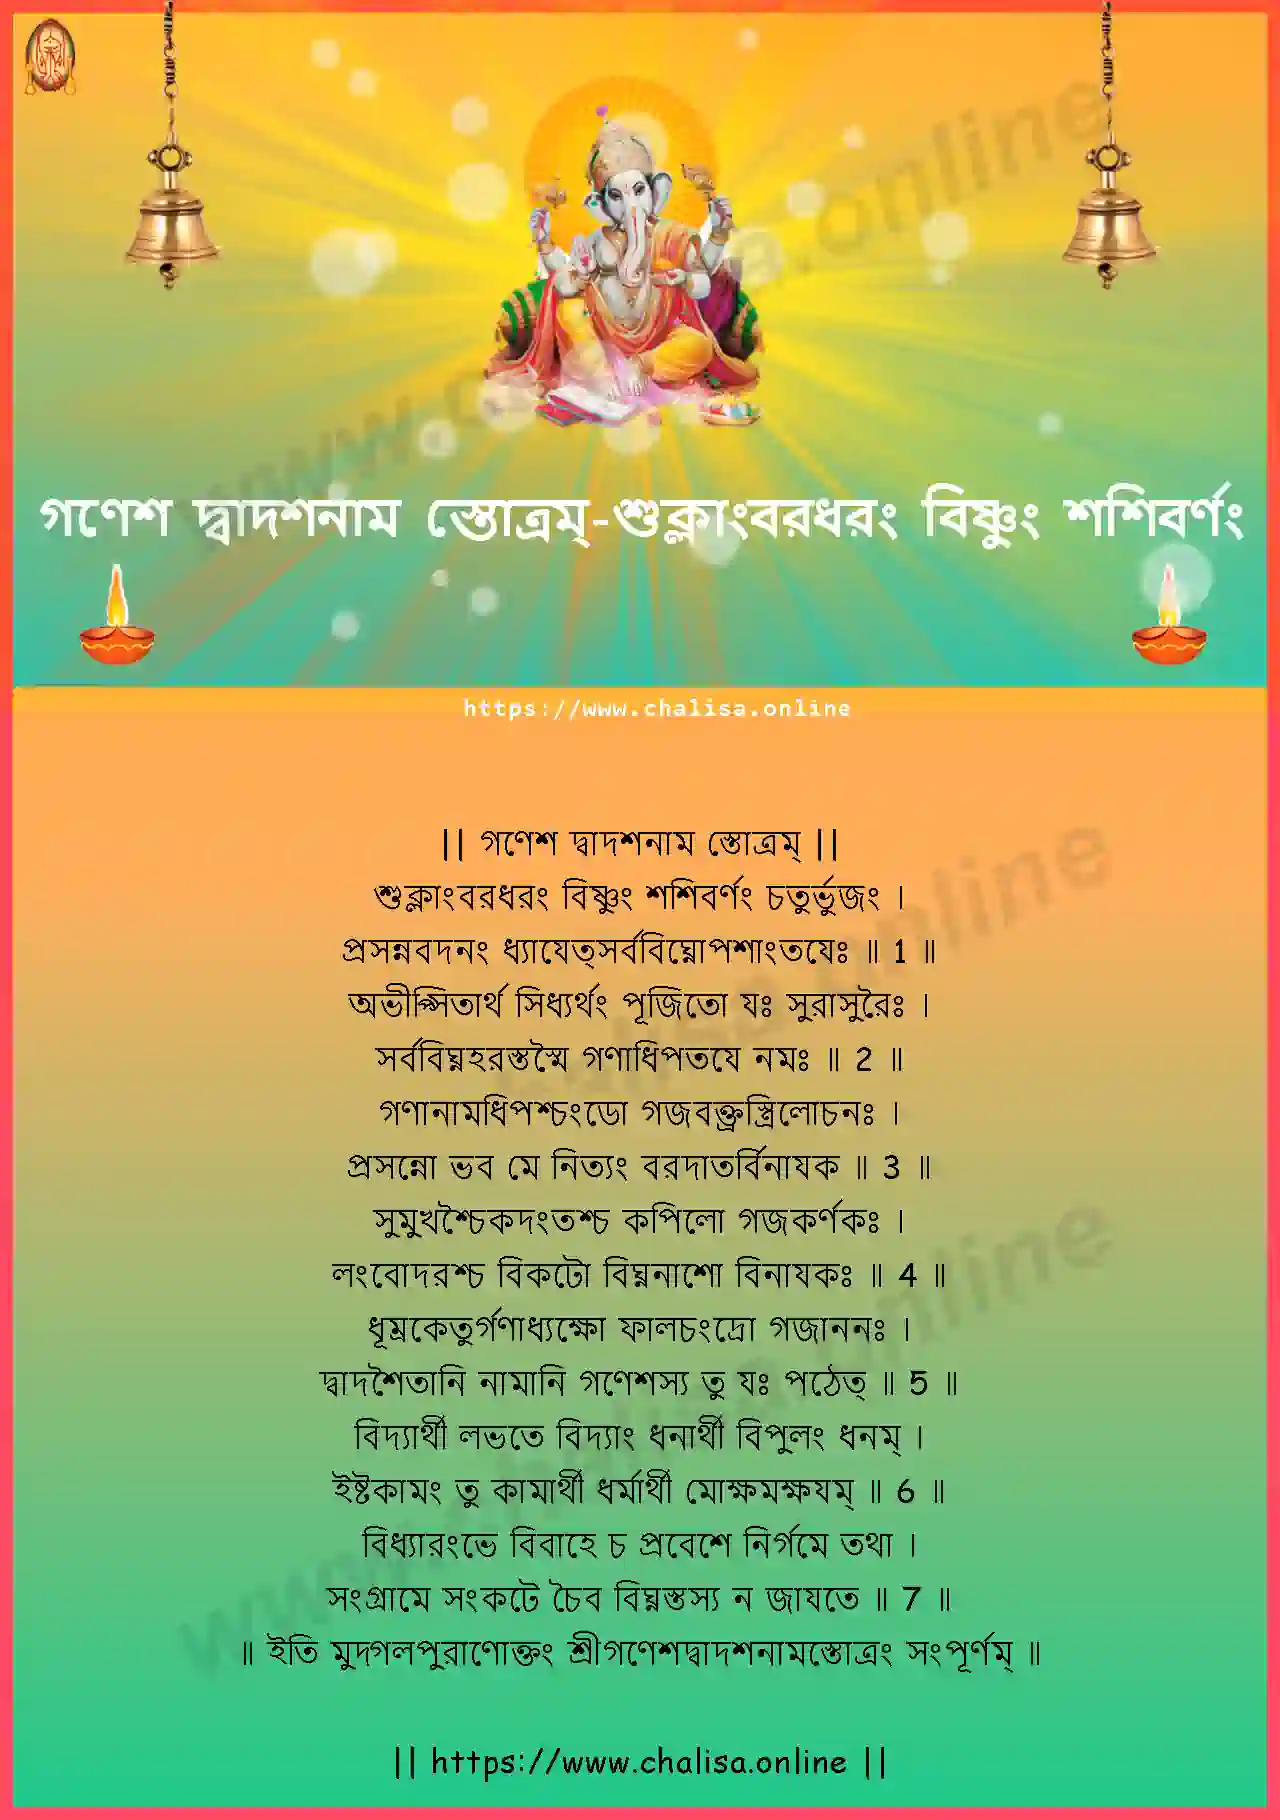 suklambaradharam-ganesha-dwadashanama-stotram-bengali-bengali-lyrics-download